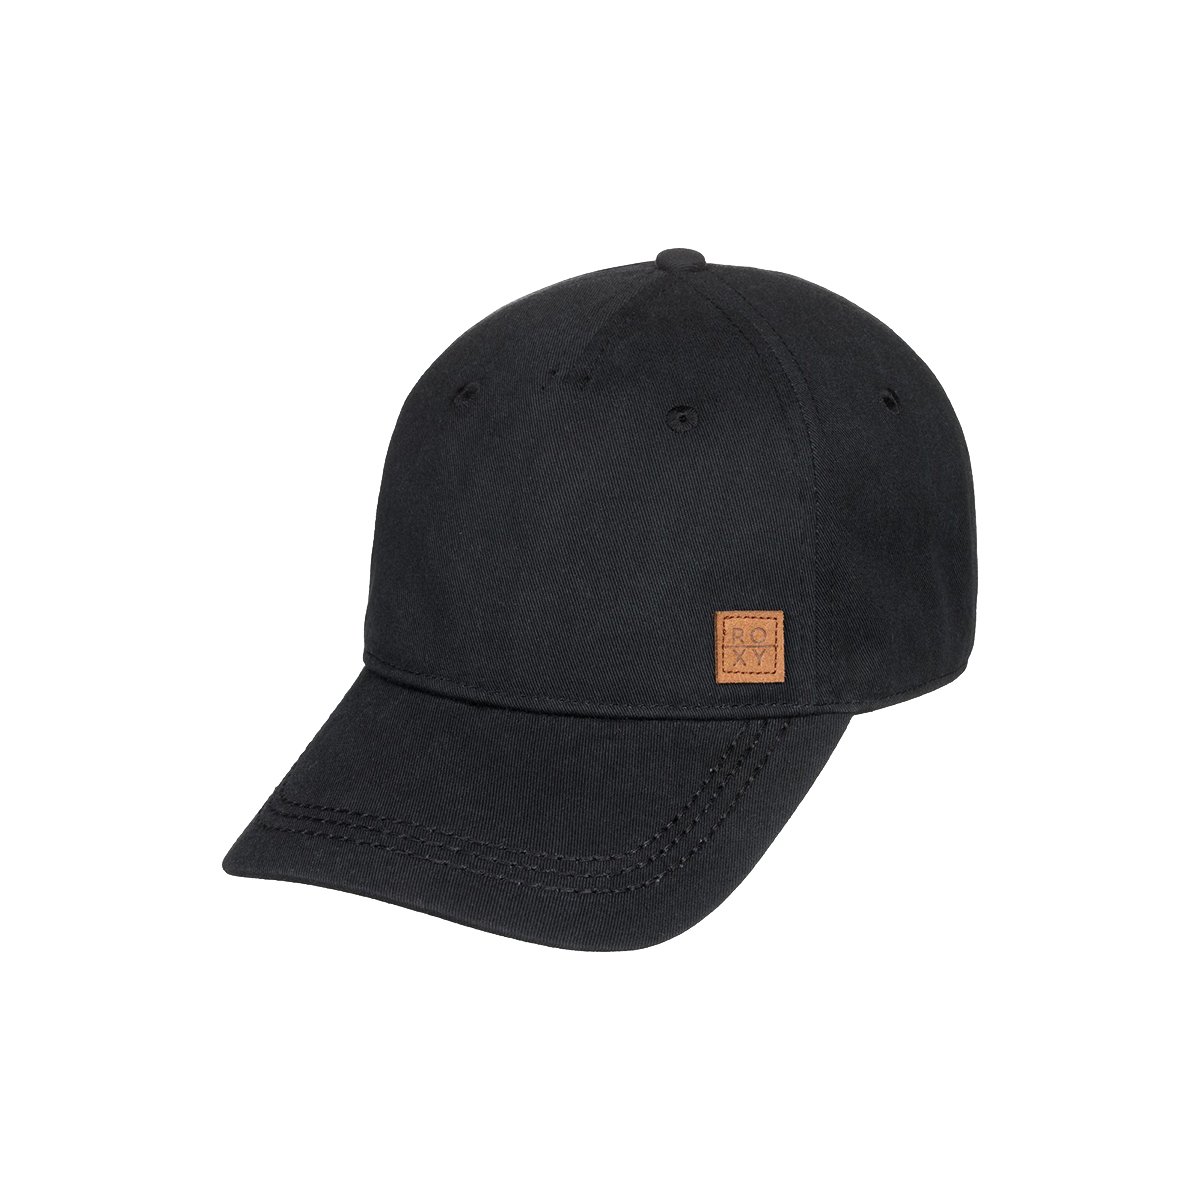 Roxy Extra Innings Kadın Şapka - Siyah - 1